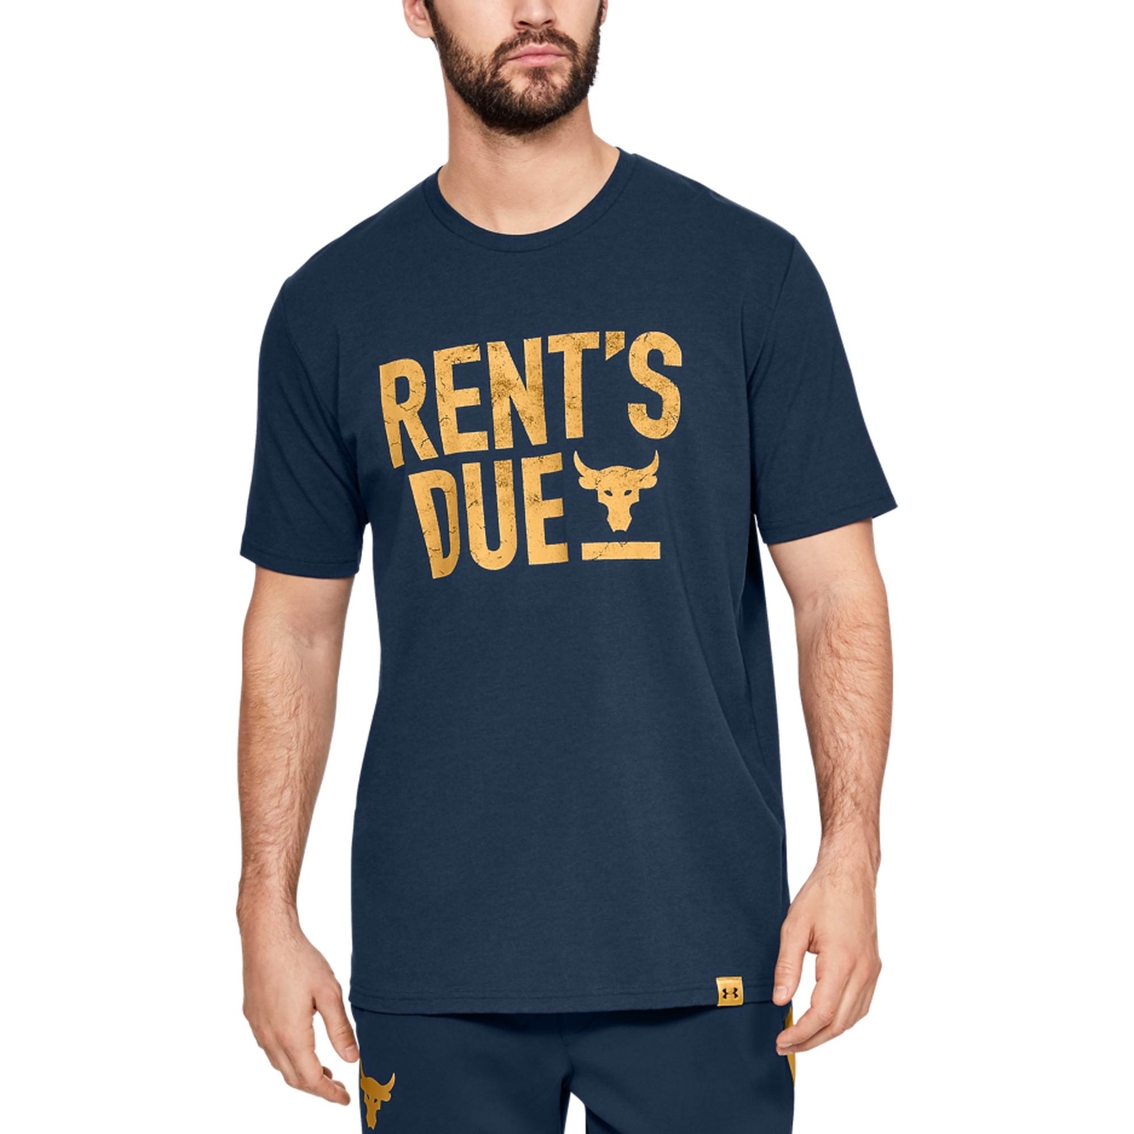 rents due shirt